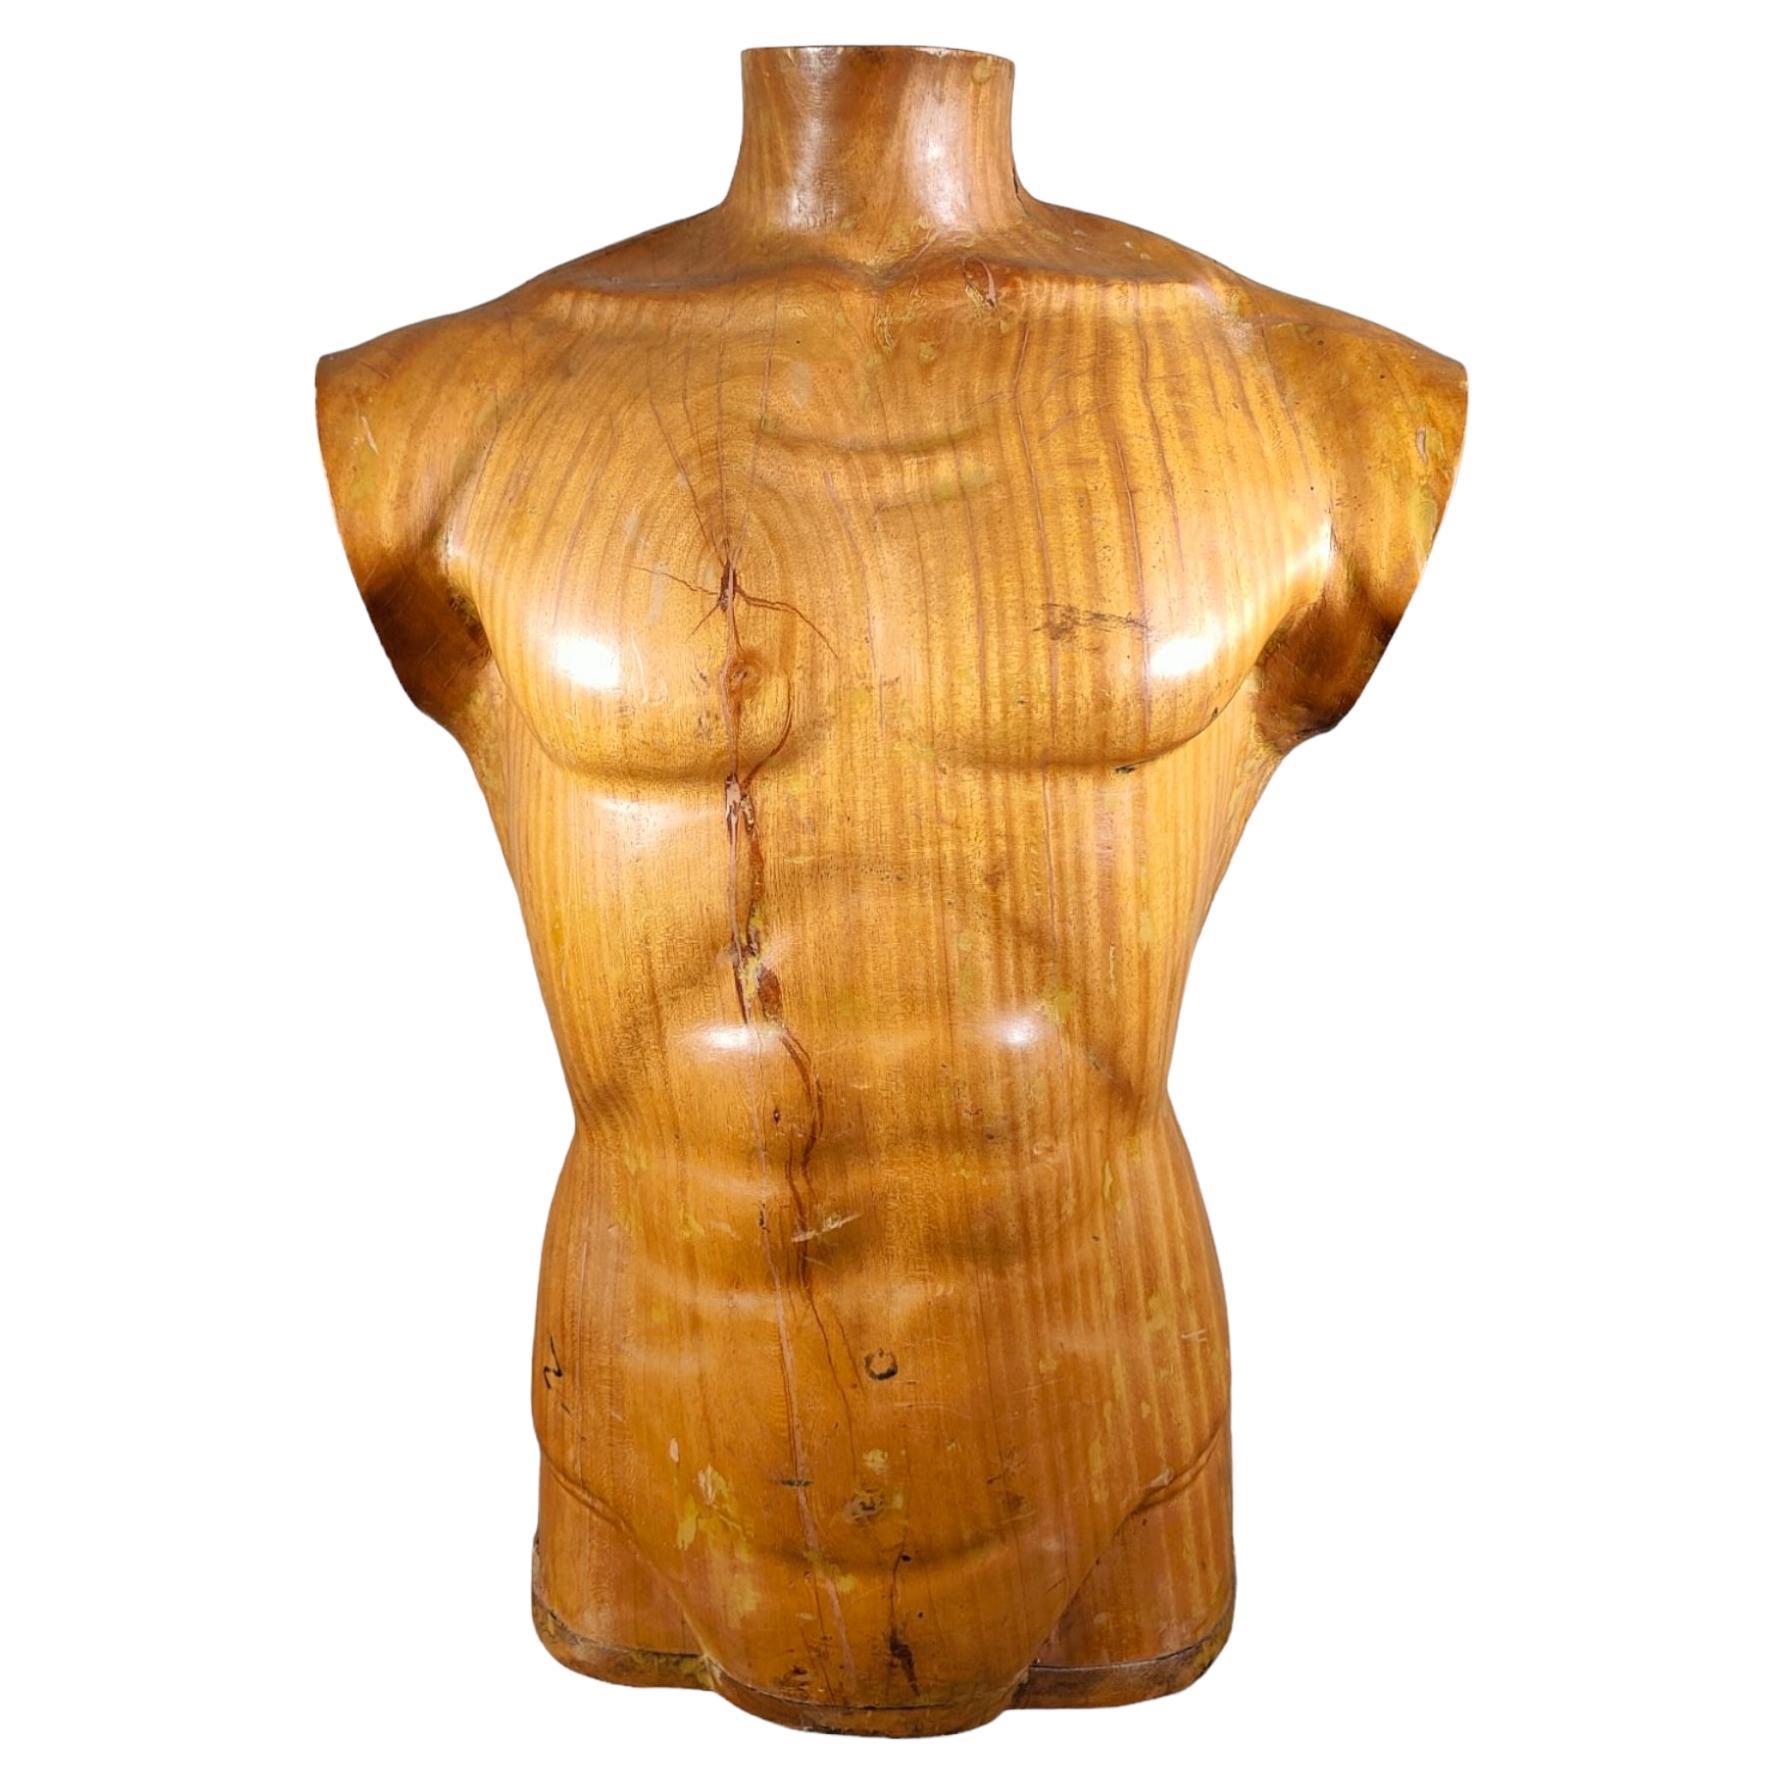 Elegant 1950s French Wooden Male Torso: Sculpted Solid Wood Craftsmanship For Sale